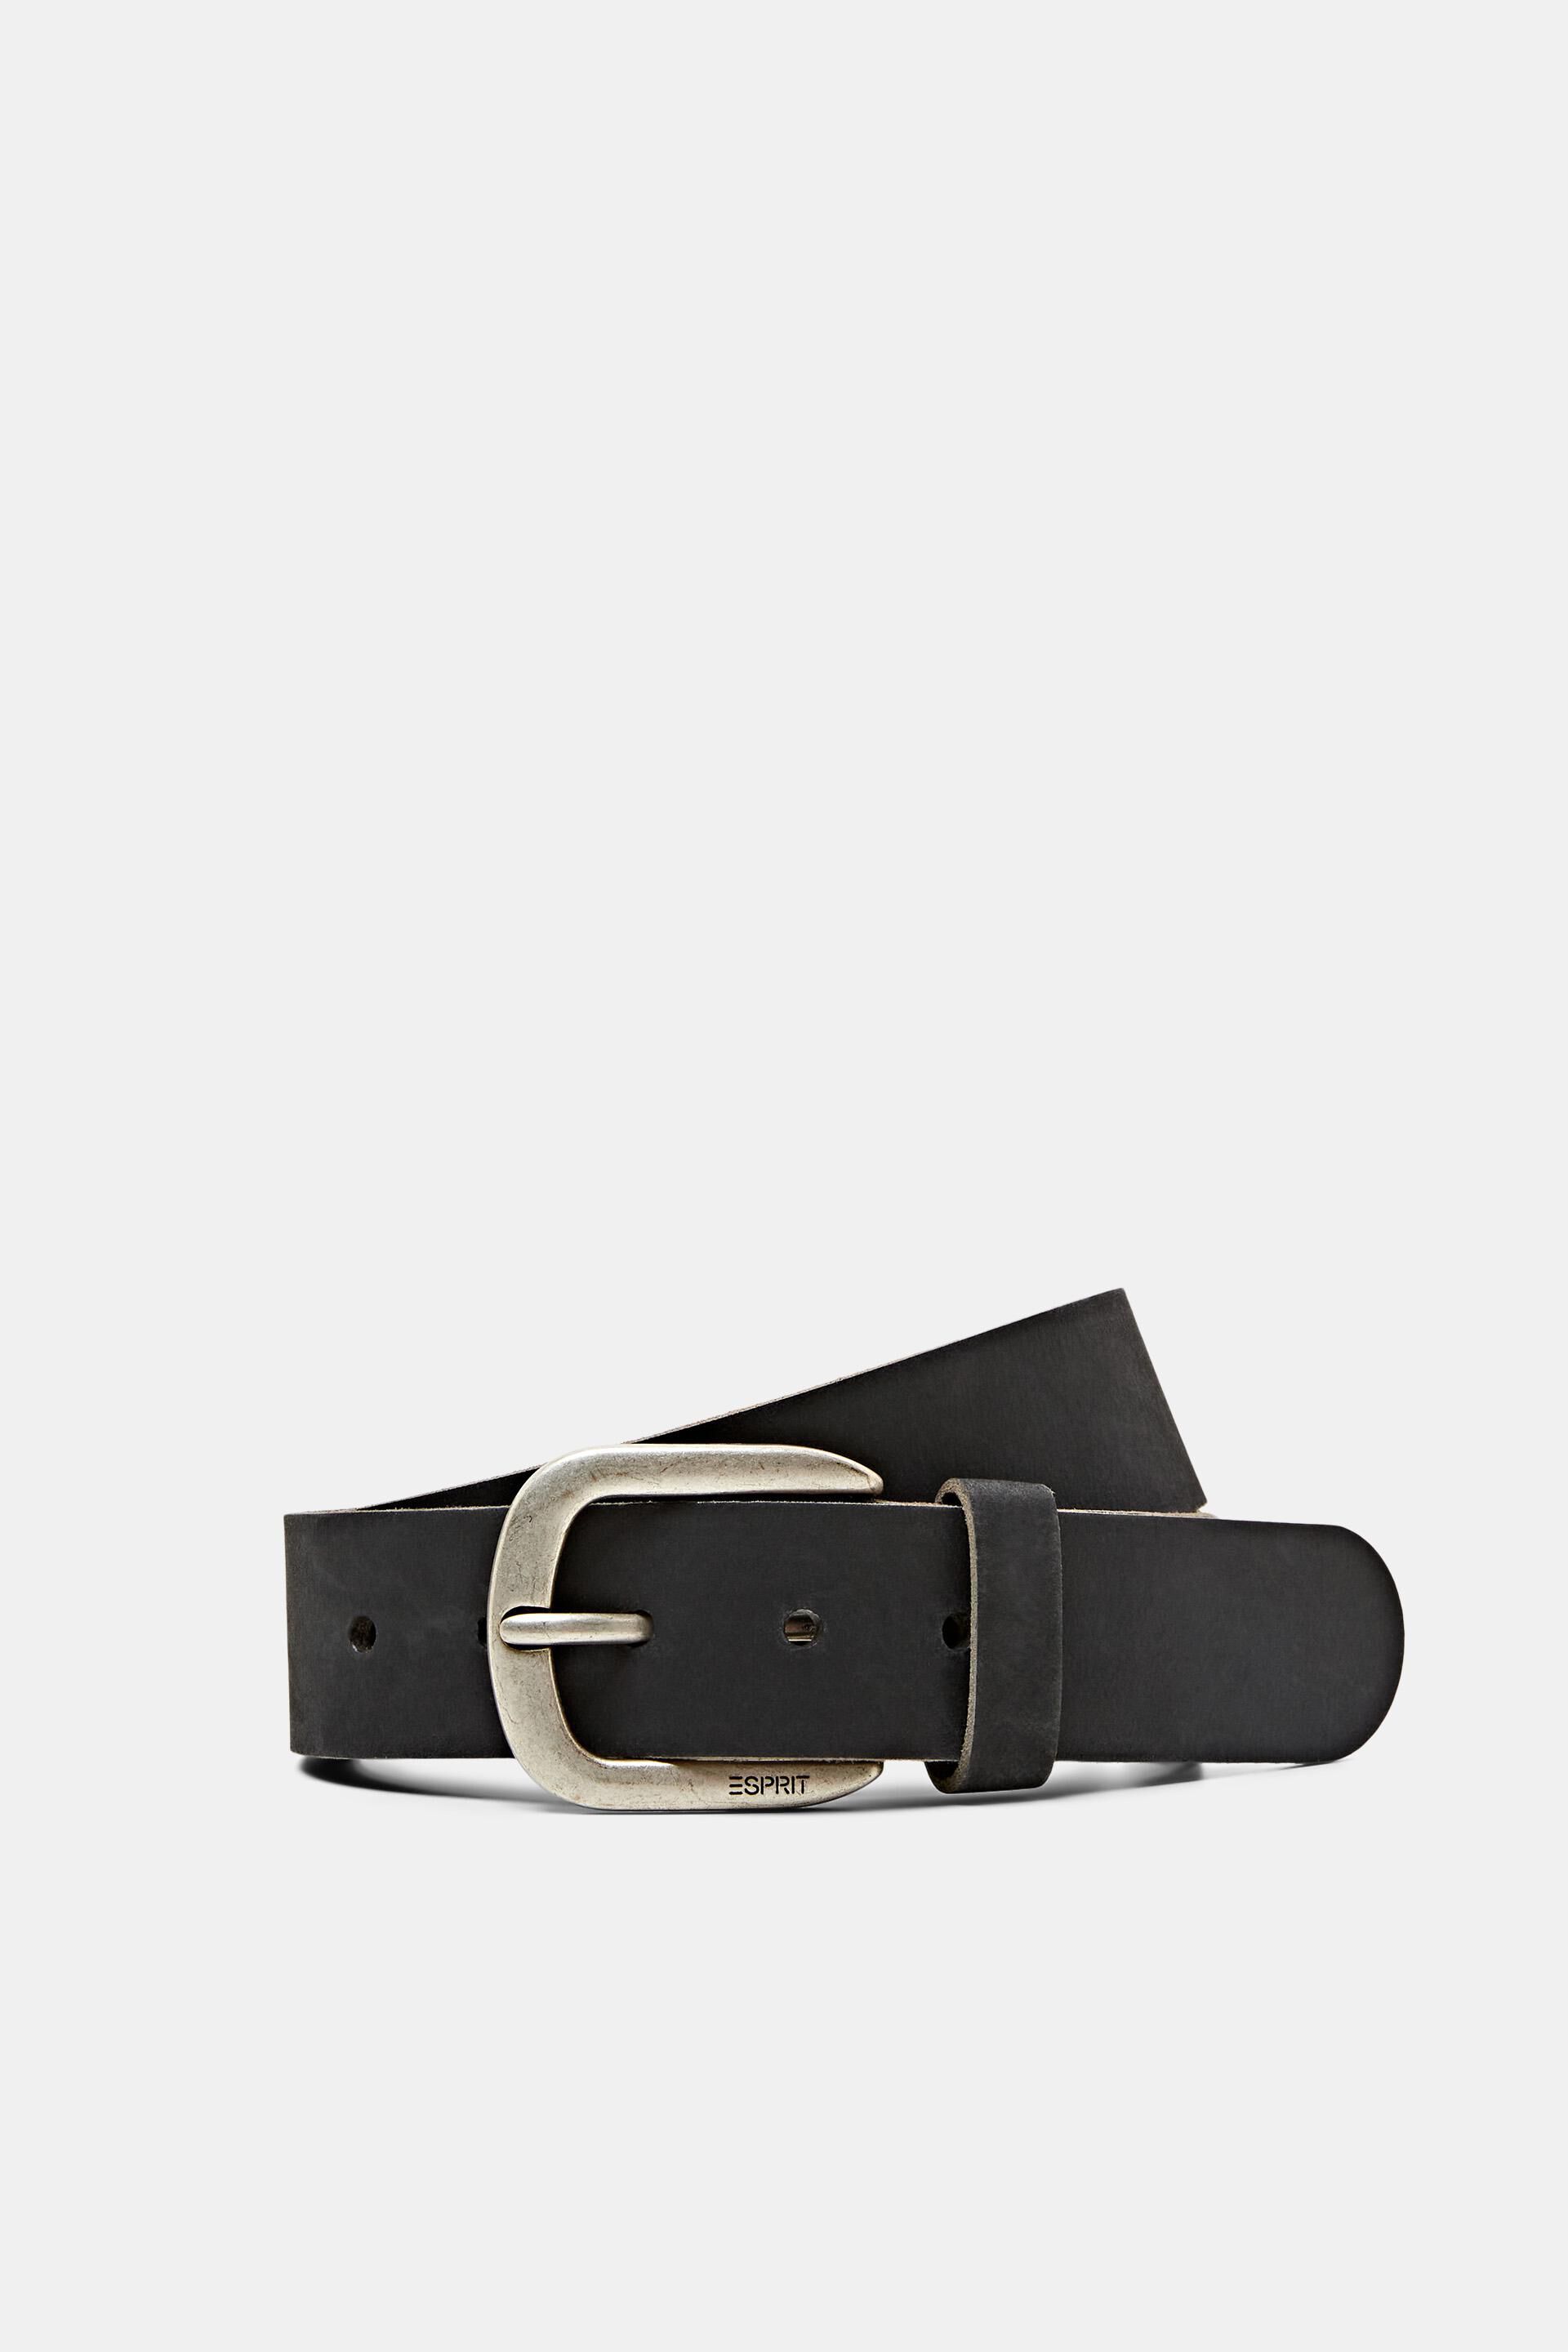 Esprit belt Leather